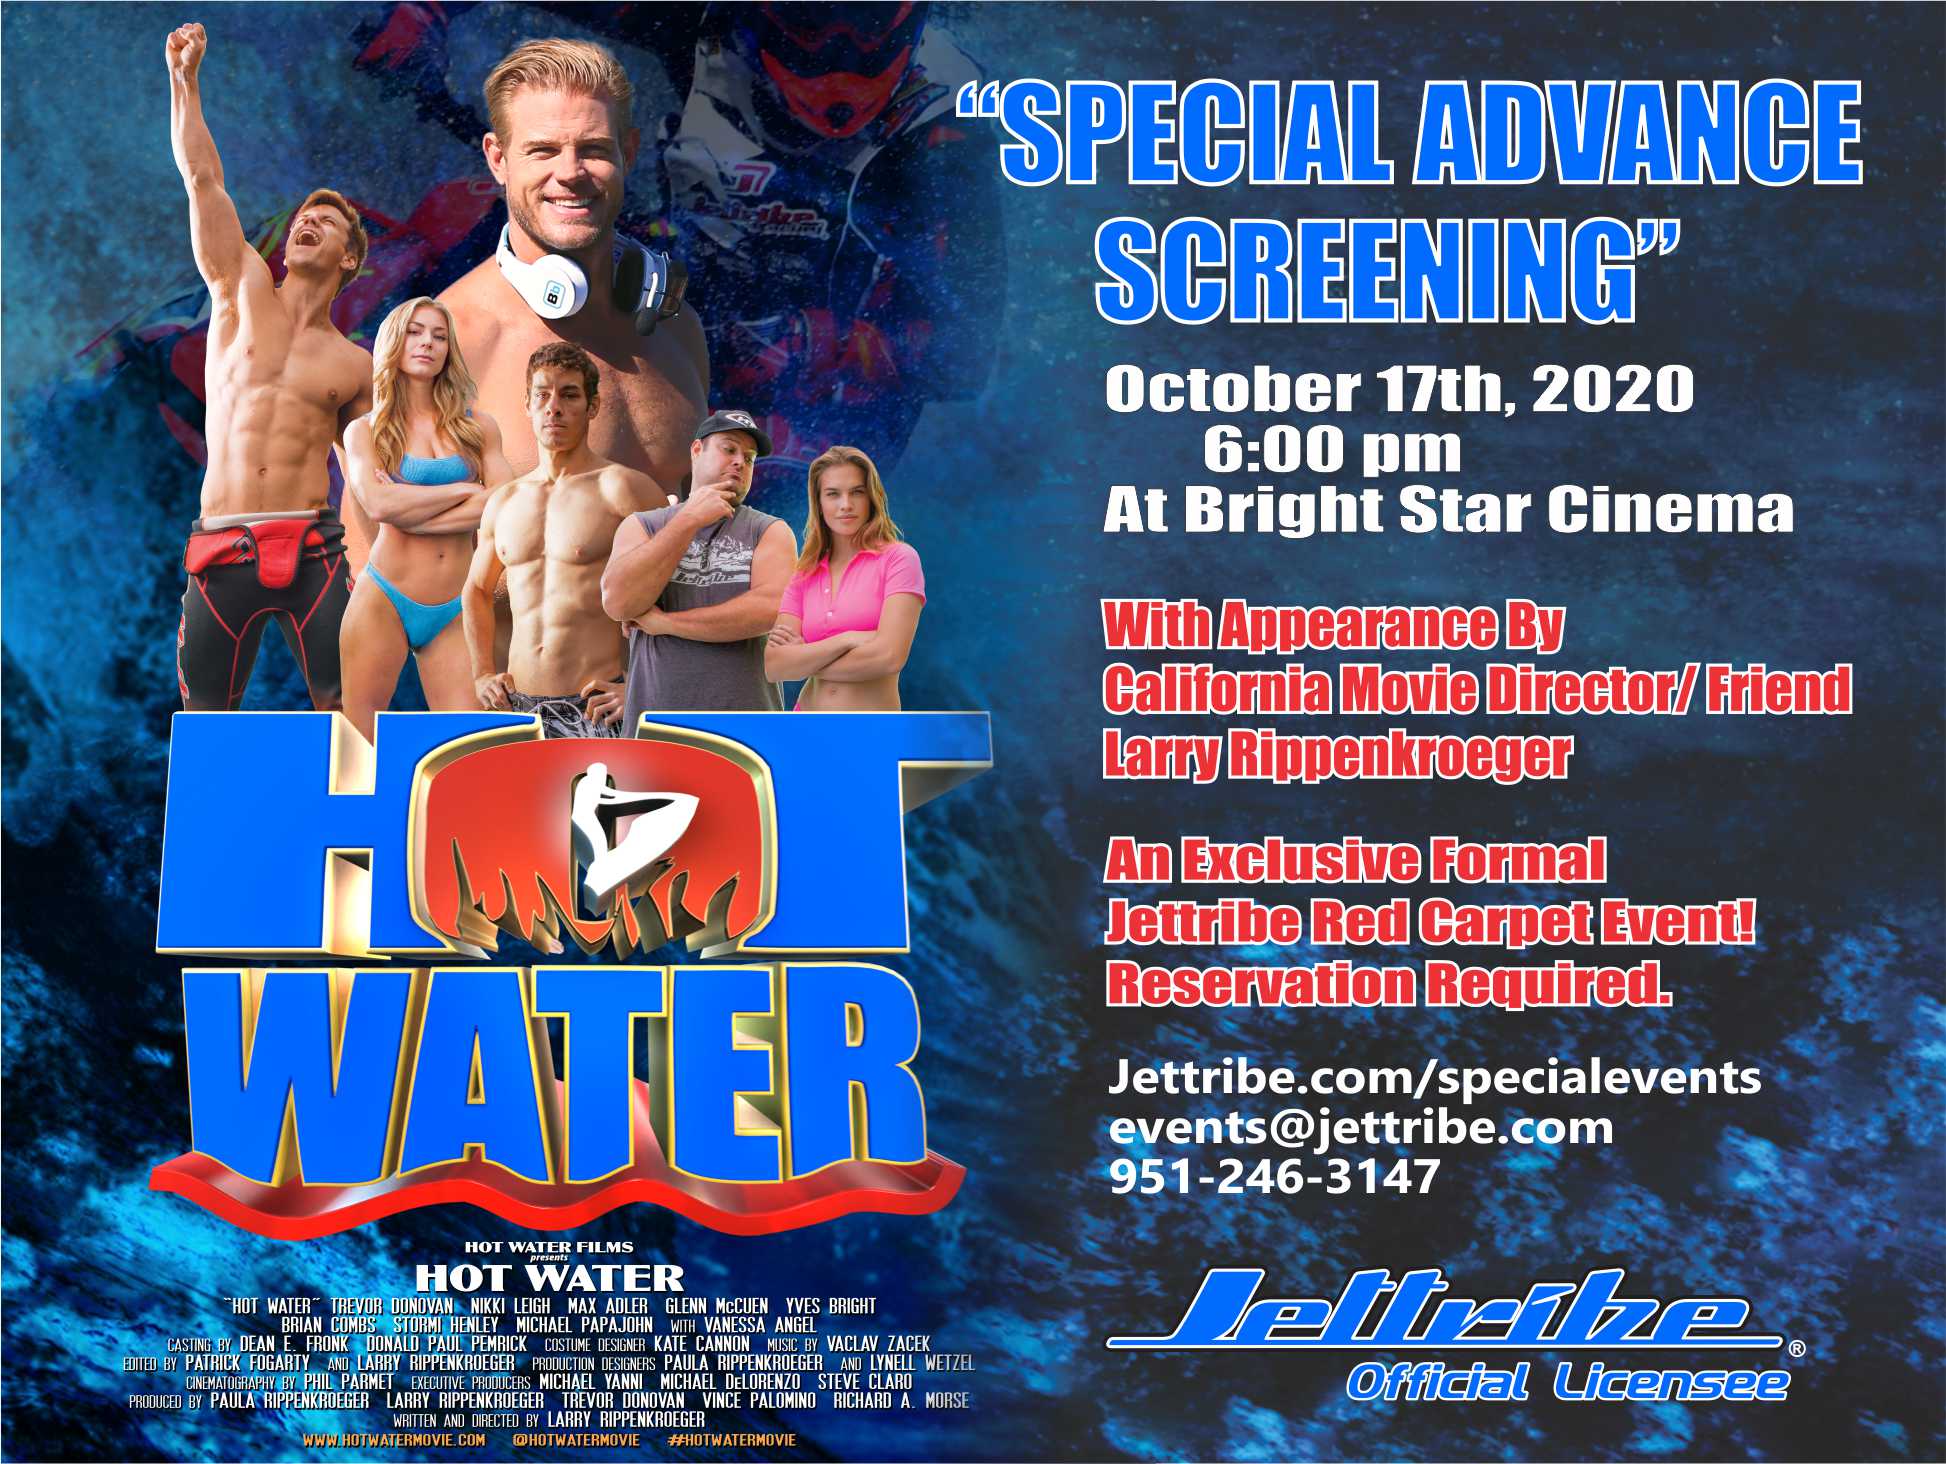 Jettribe Texas Hosting Advance Screening of “Hot Water: The Movie” on Saturday in Sulphur Springs